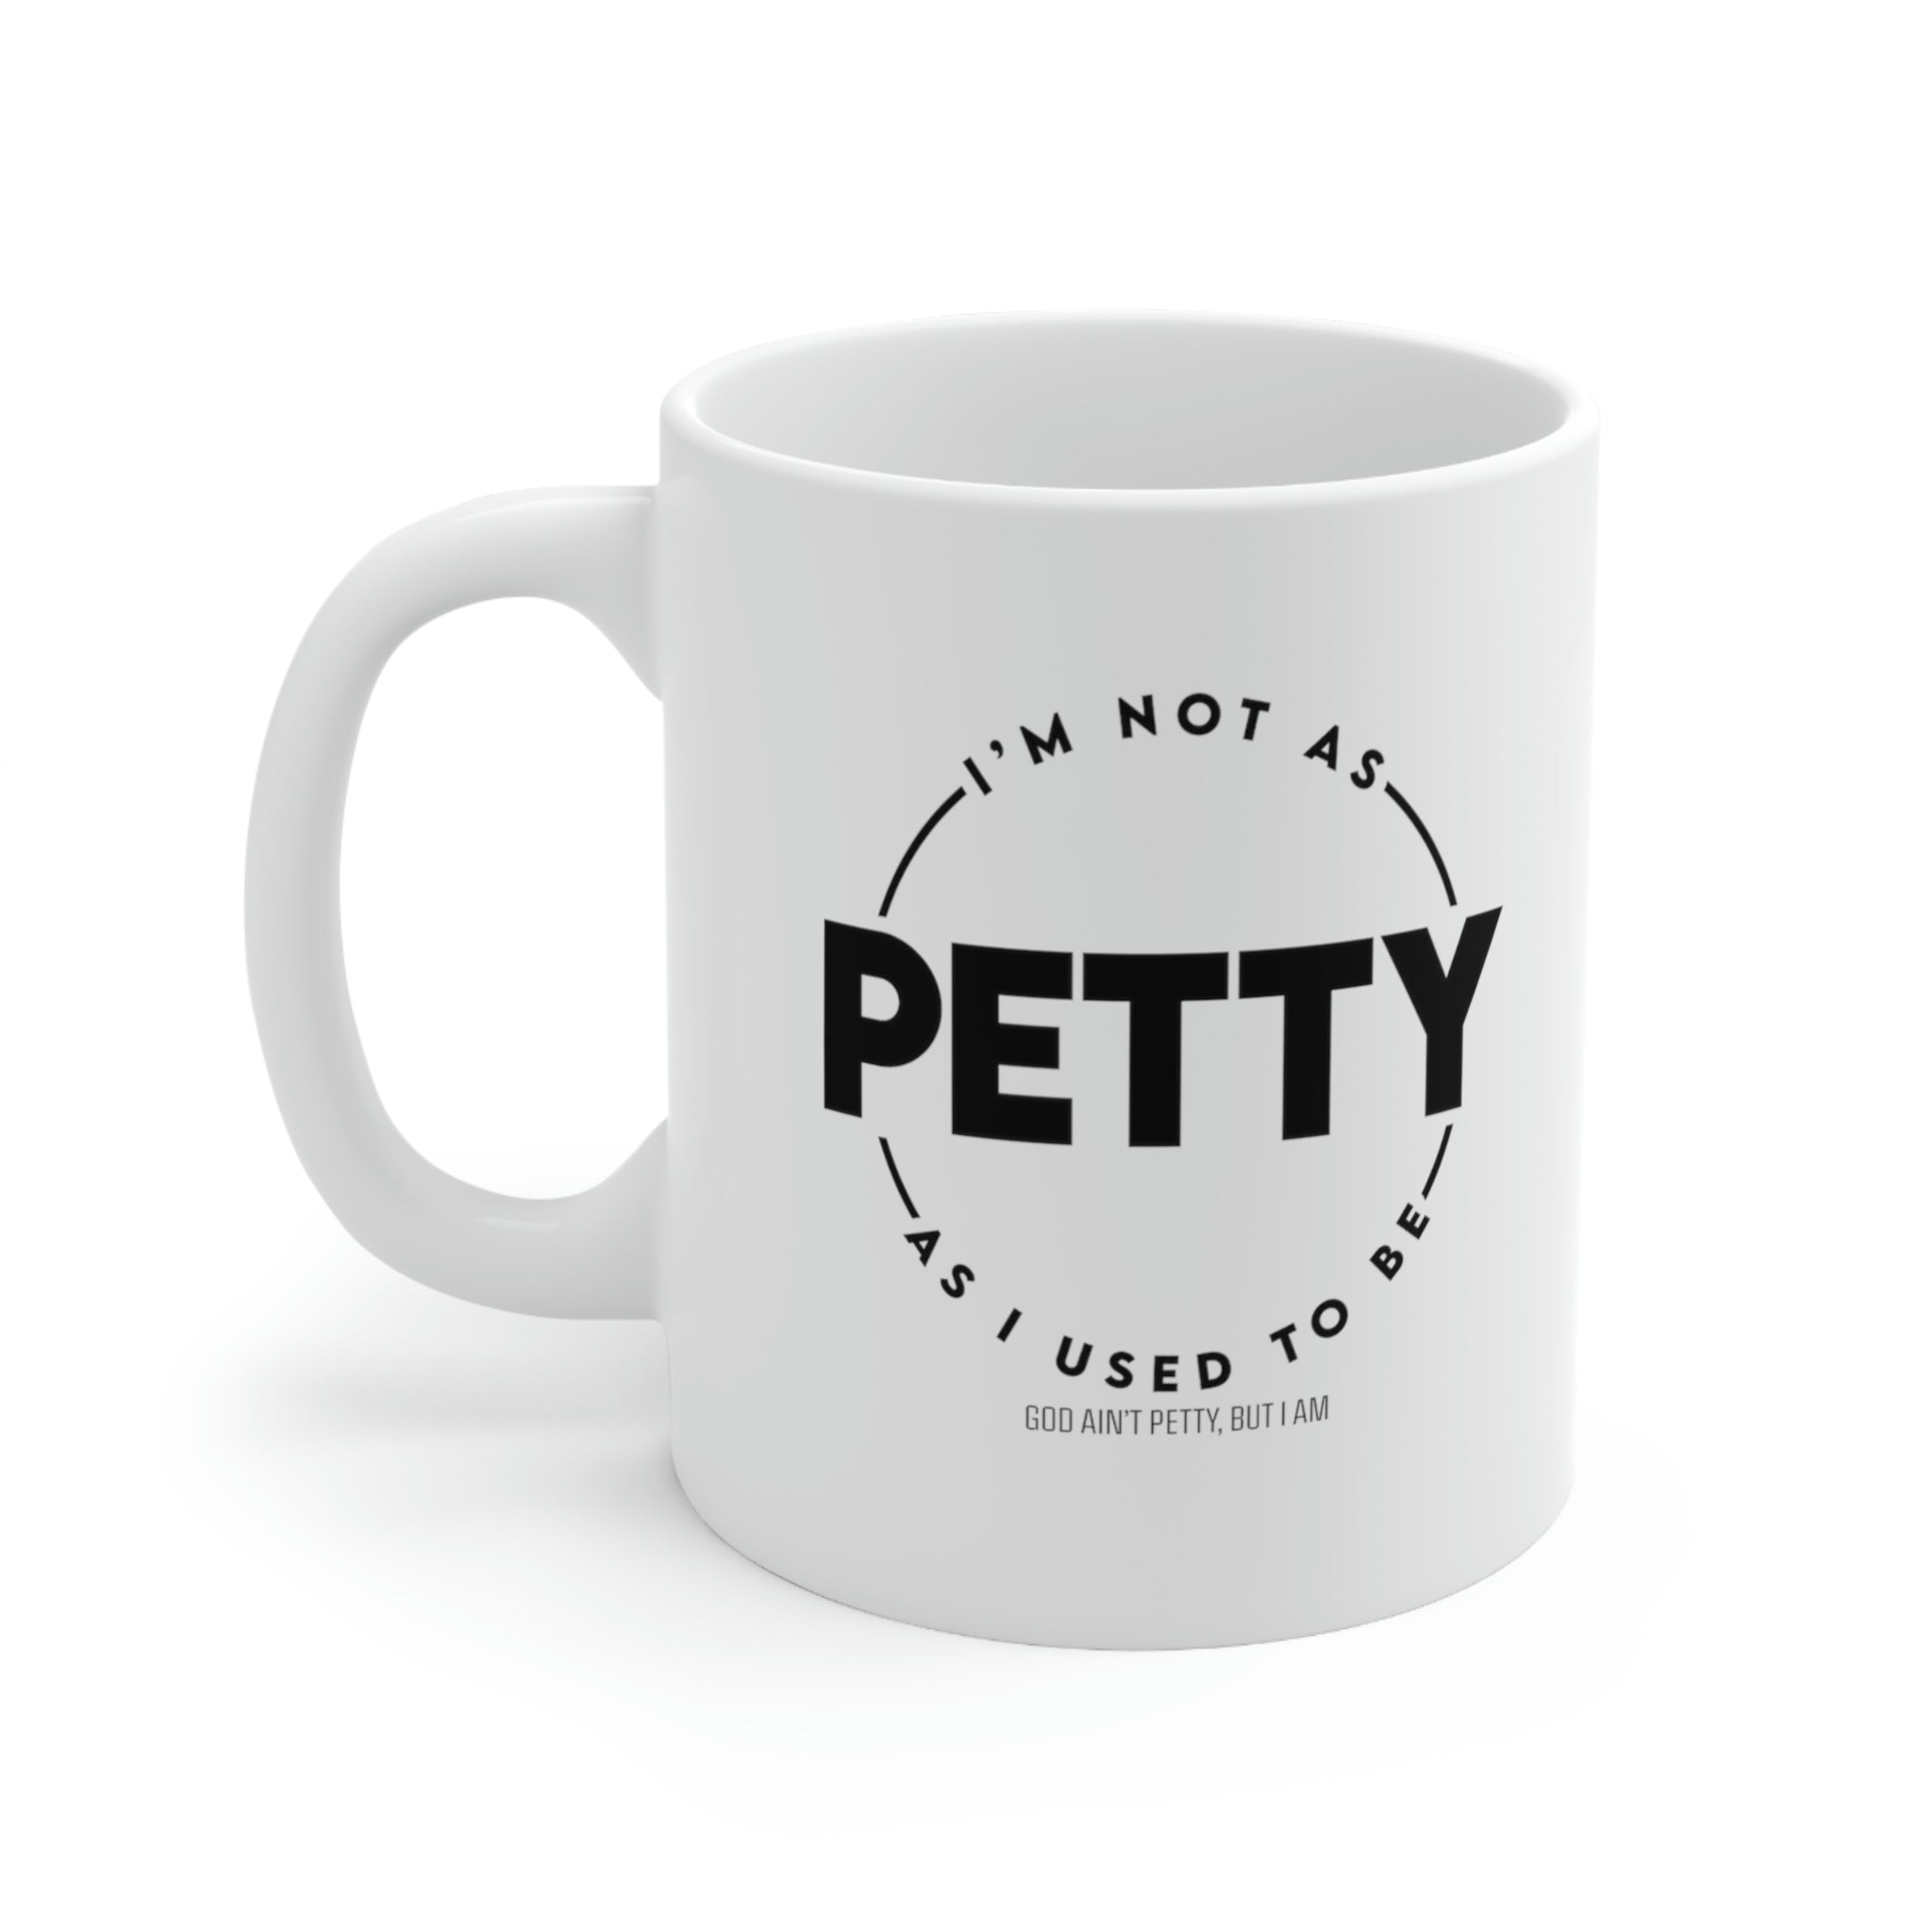 I'm not as Petty as I used to be Mug 11oz (White/Black)-Mug-The Original God Ain't Petty But I Am